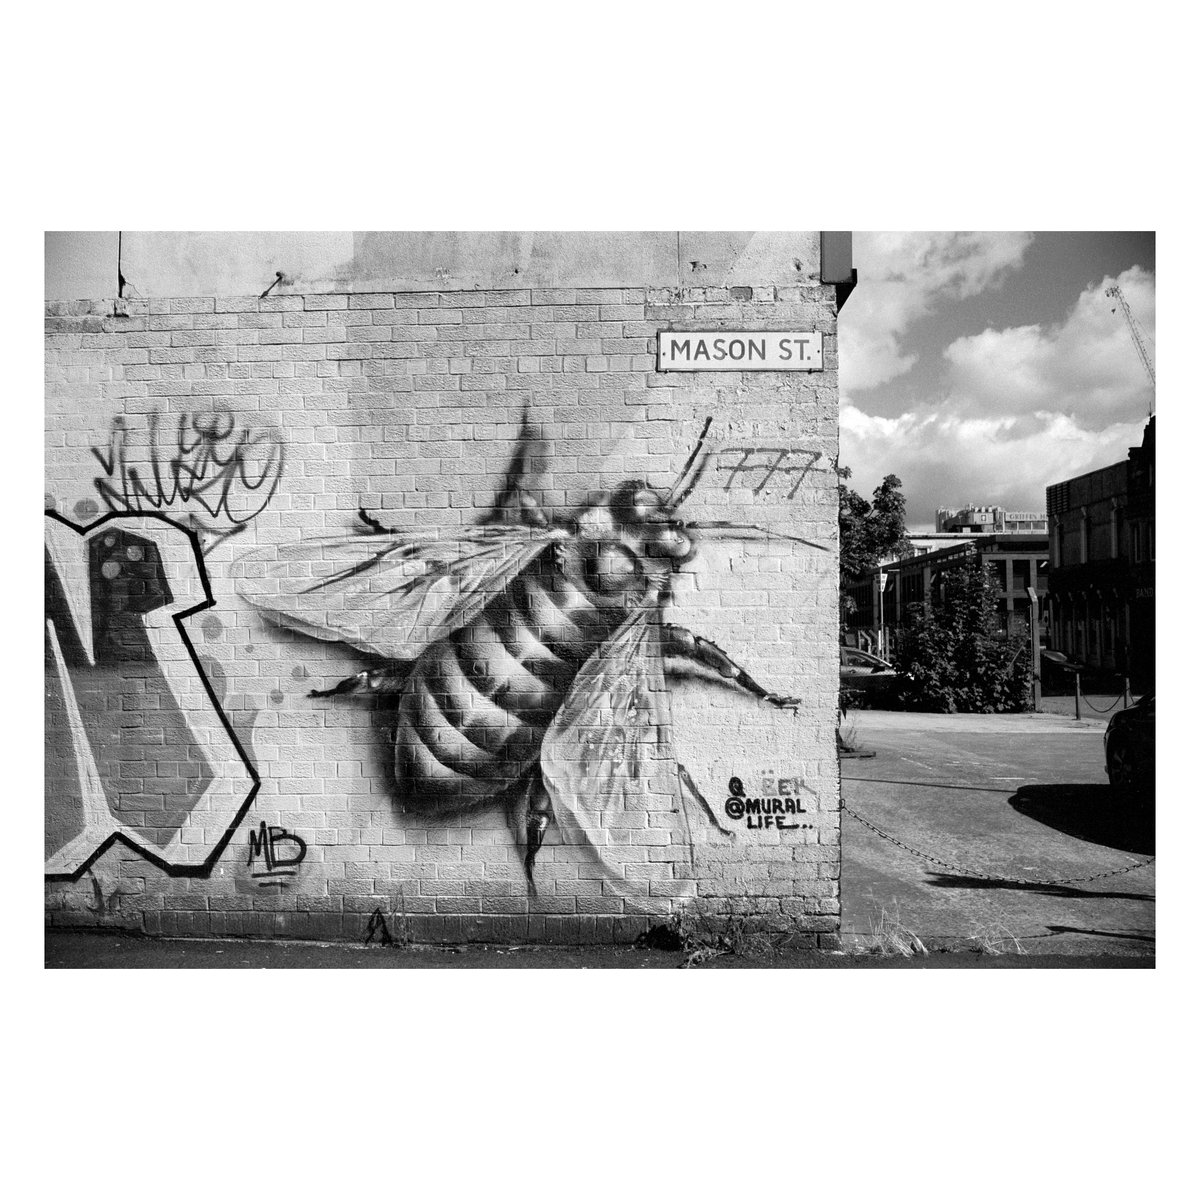 Bee Mural, Manchester, UK

📷: @PENTAXIAN LX
🎞️: @FujifilmUK Acros II

#urbanphotography #urban #urbantexture #manchester #england #graffiti #filmphotography #filmisnotdead #pentax #fujiacros #shotonfilm #analogphotography #analog #analogue #mural #manchesterbee #bee